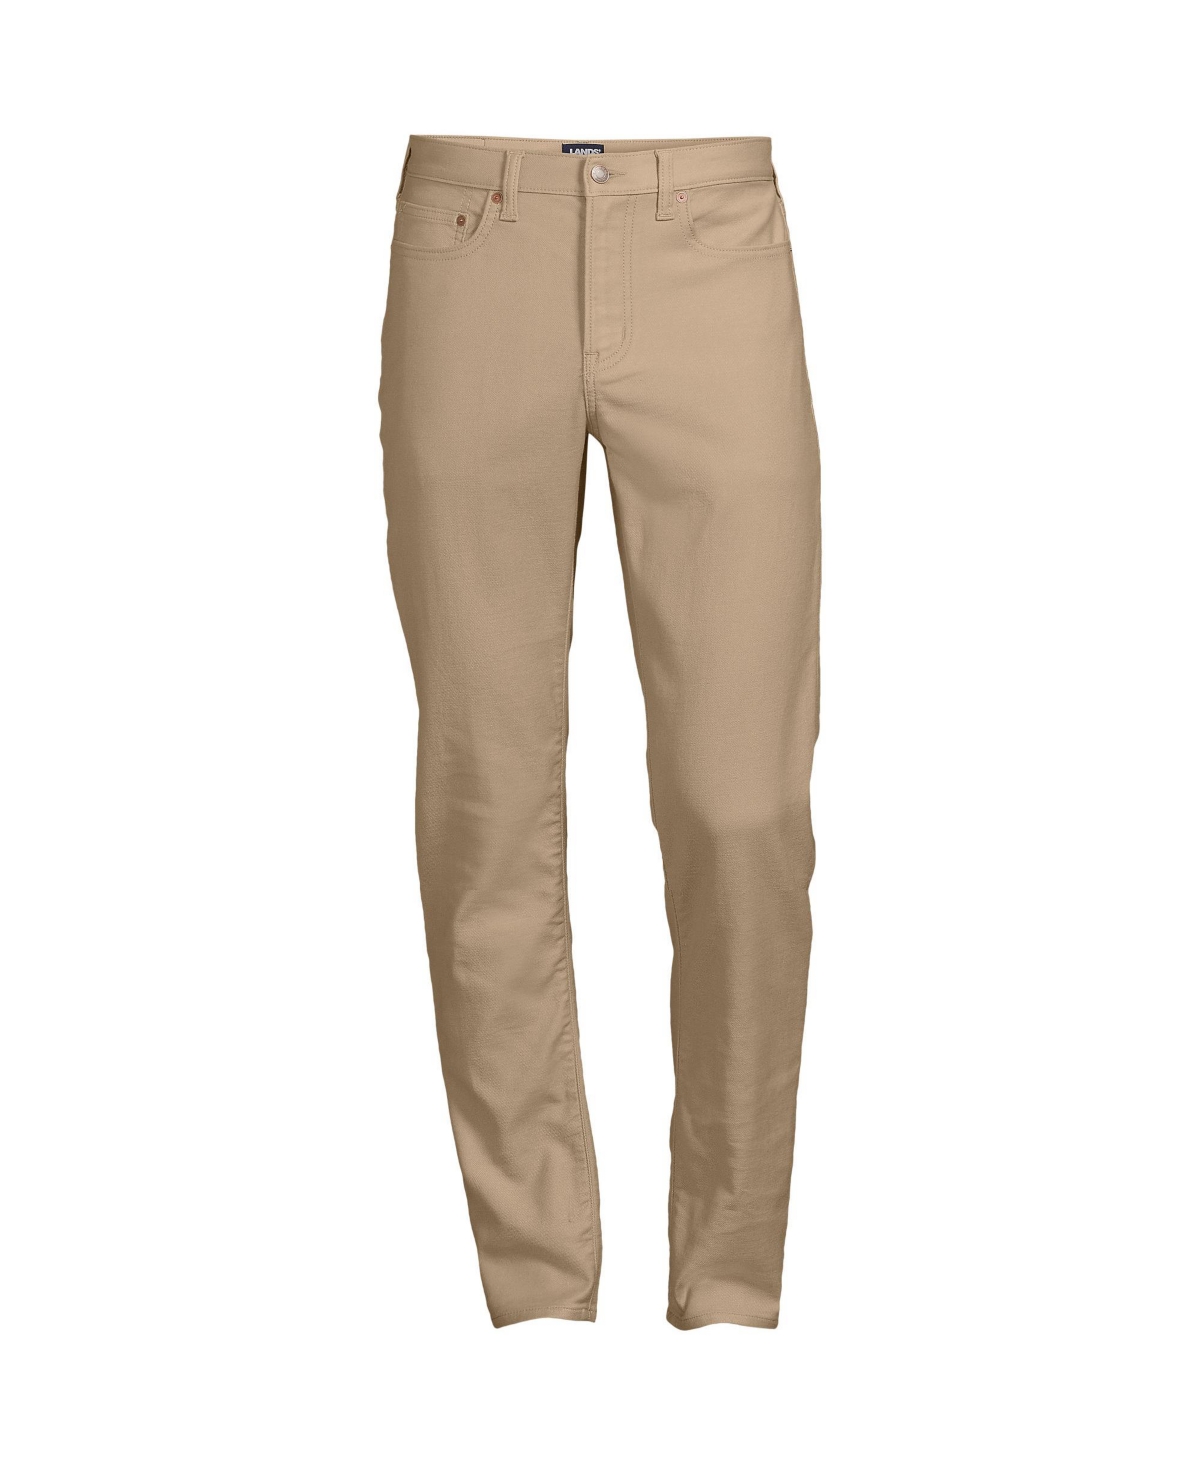 Men's Straight Fit Knit 5-Pocket Pants - Desert tan